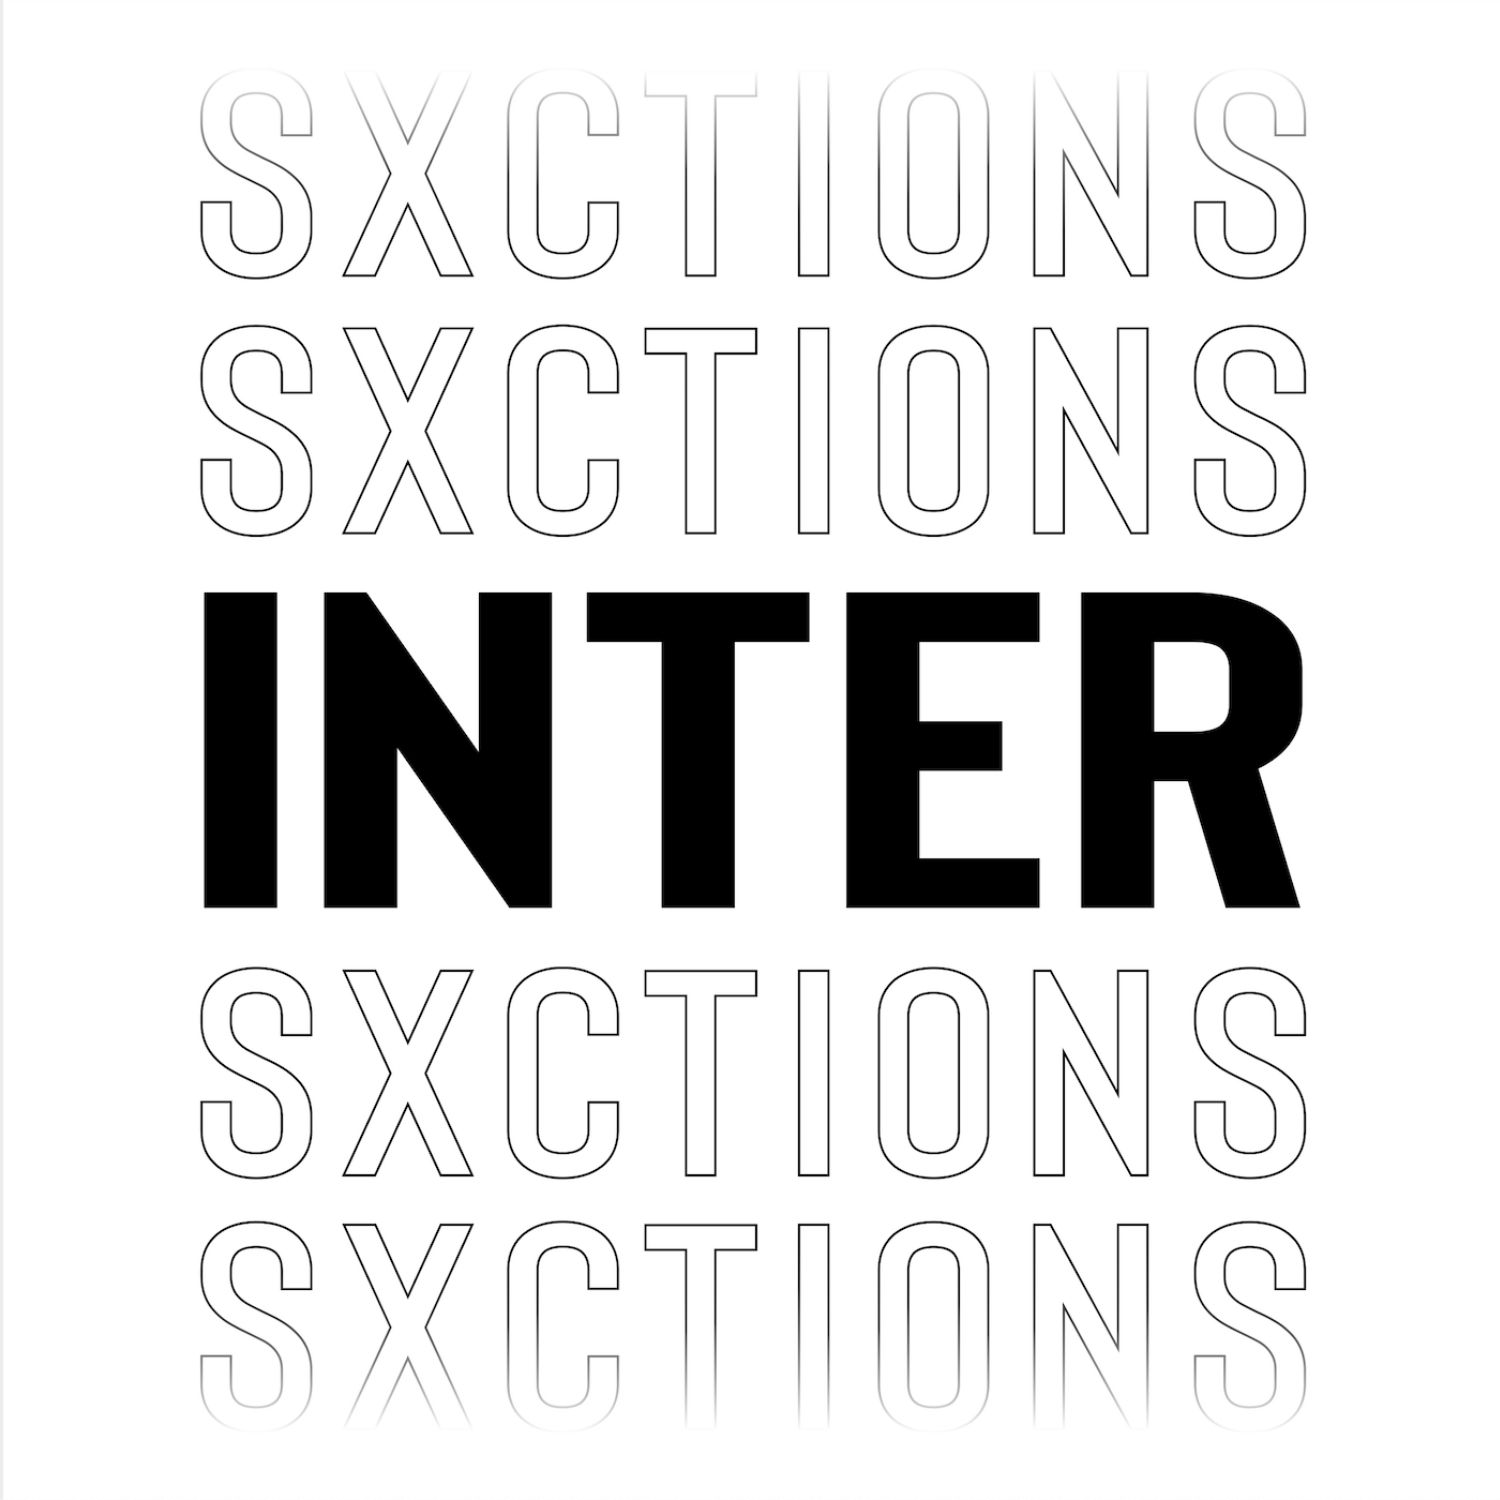 intersxctions